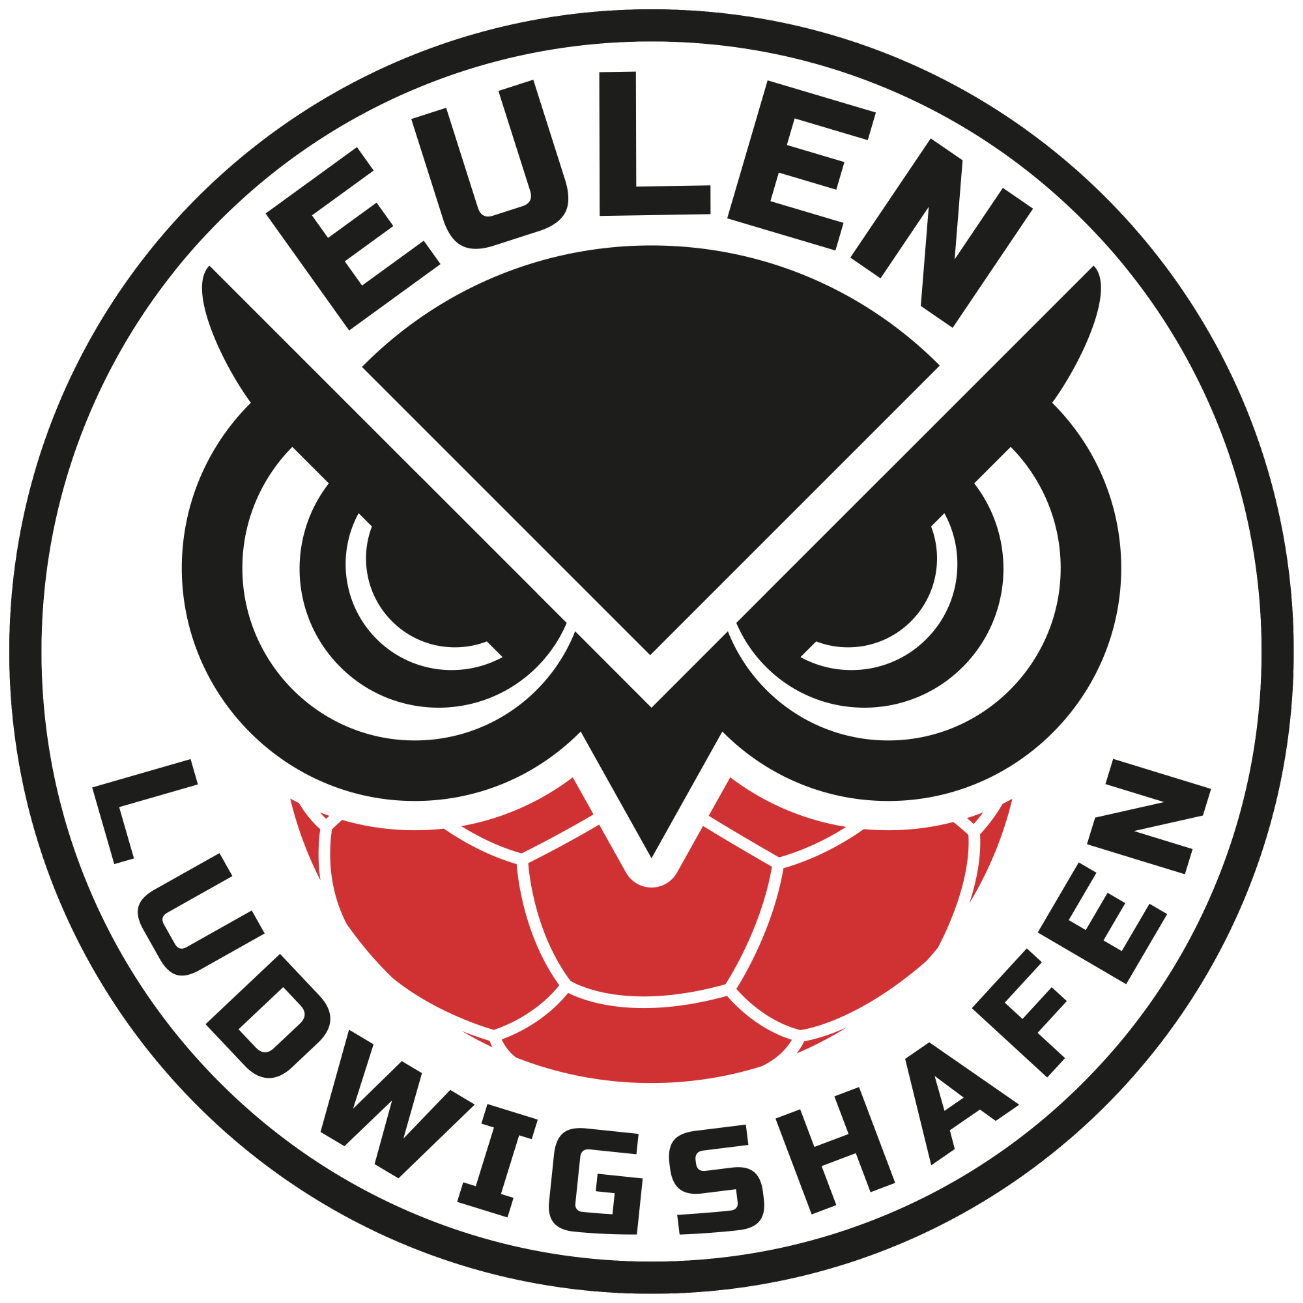 Die Eulen Ludwigshafen eulen-ludwigshafen.de